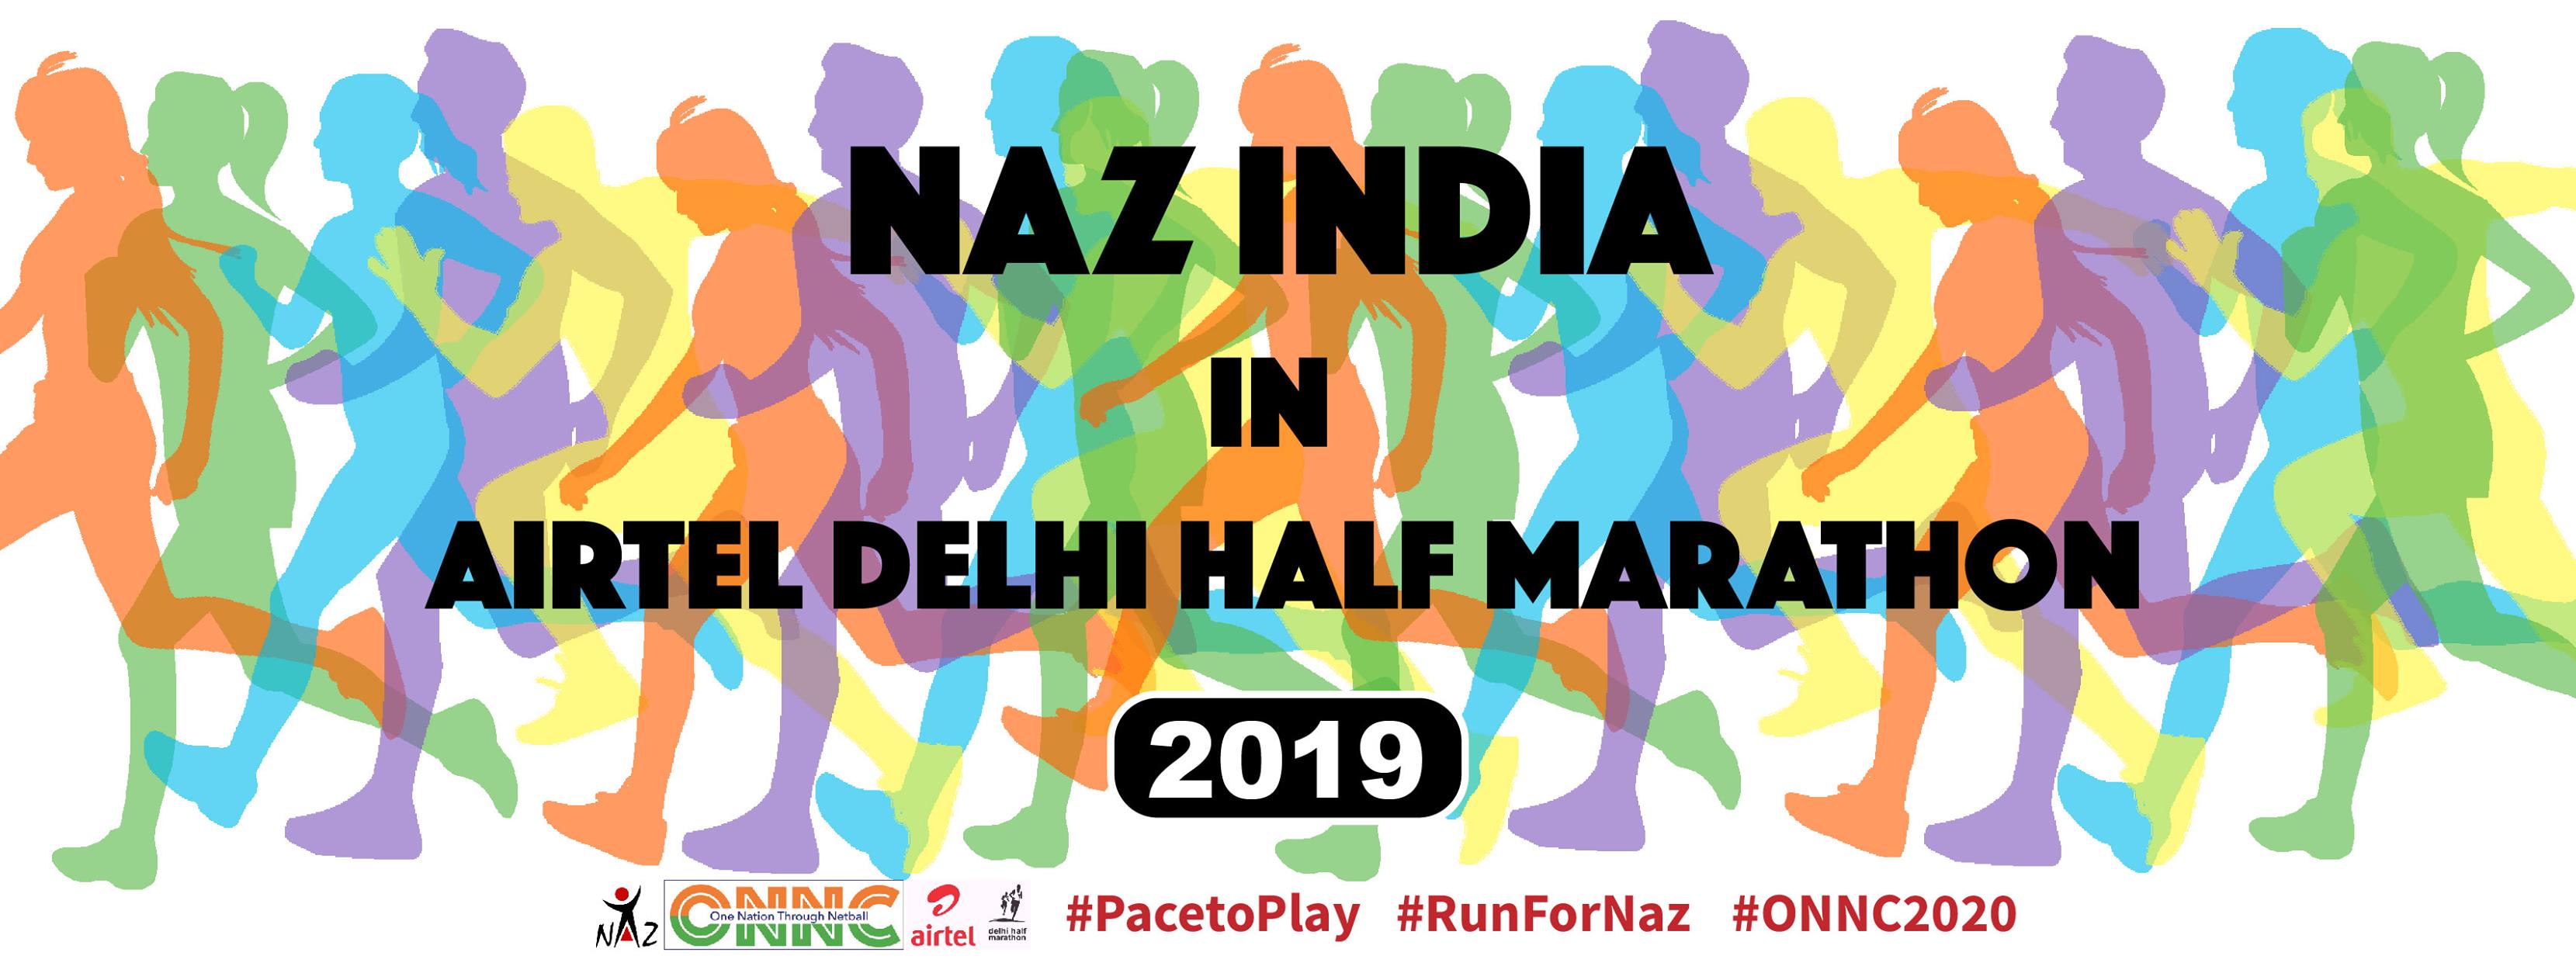 Airtel Delhi Half Marathon 2019